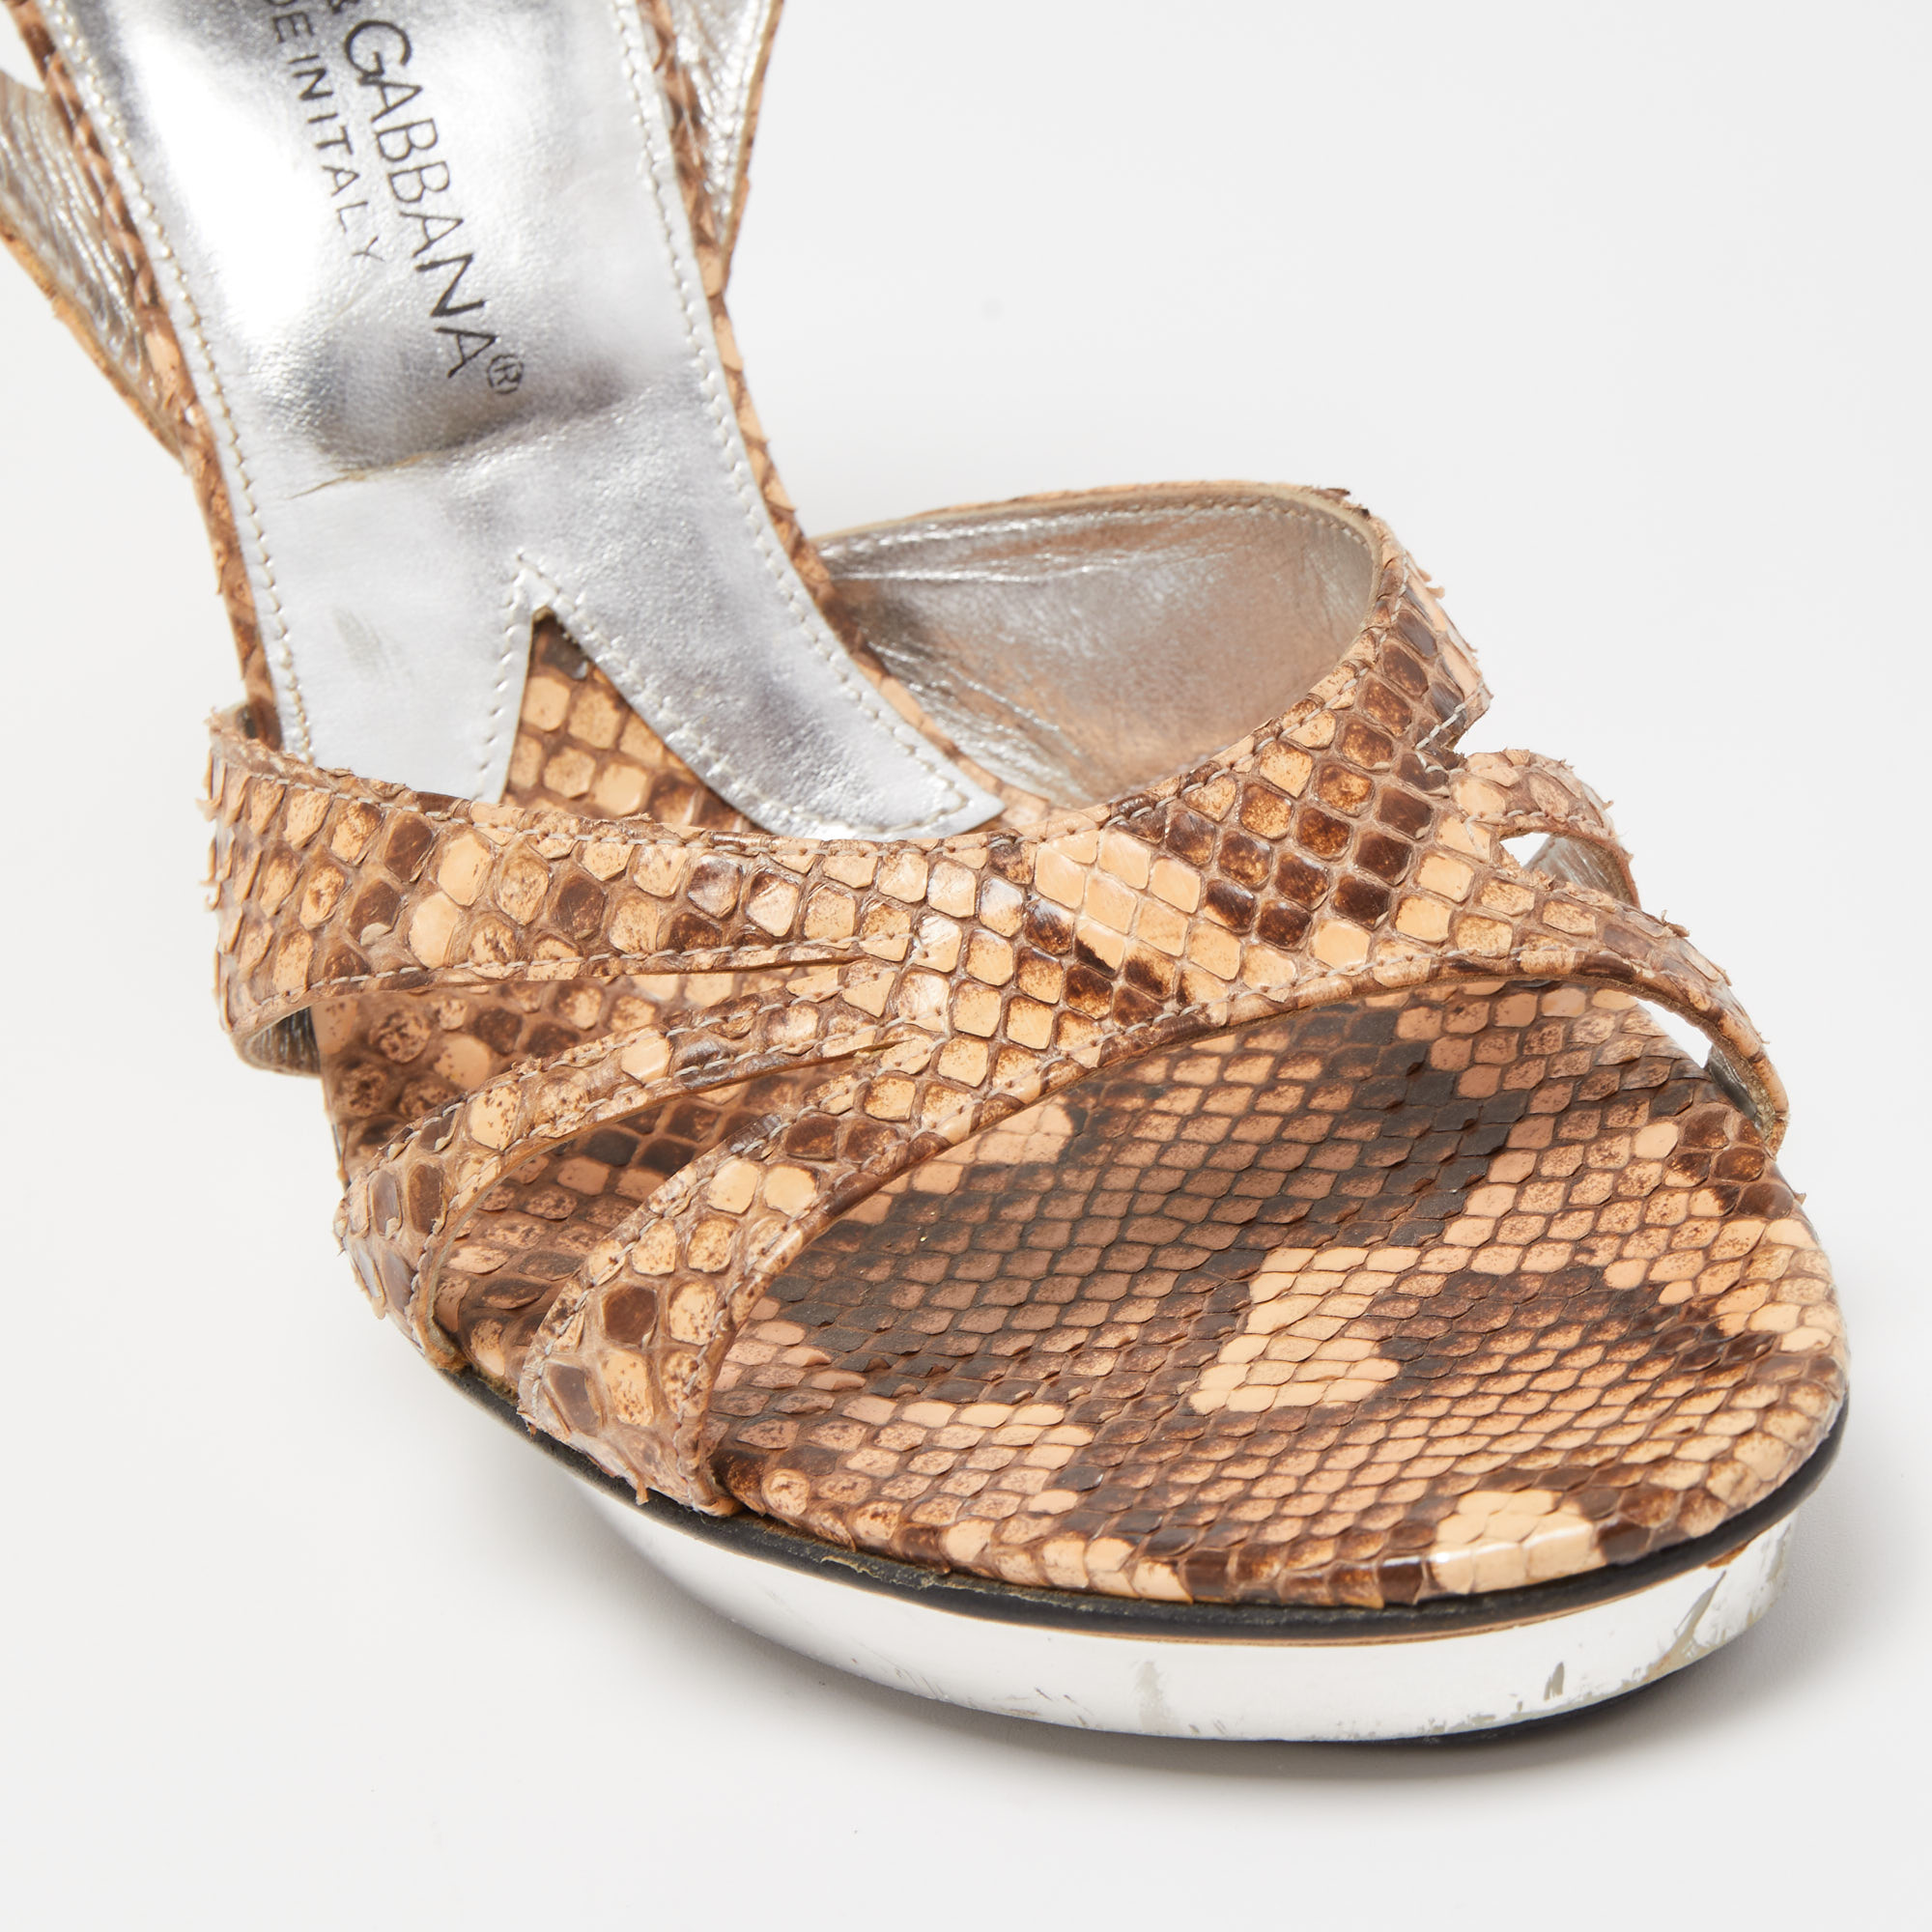 Dolce & Gabbana Beige Python Leather Ankle Strap Sandals Size 36.5